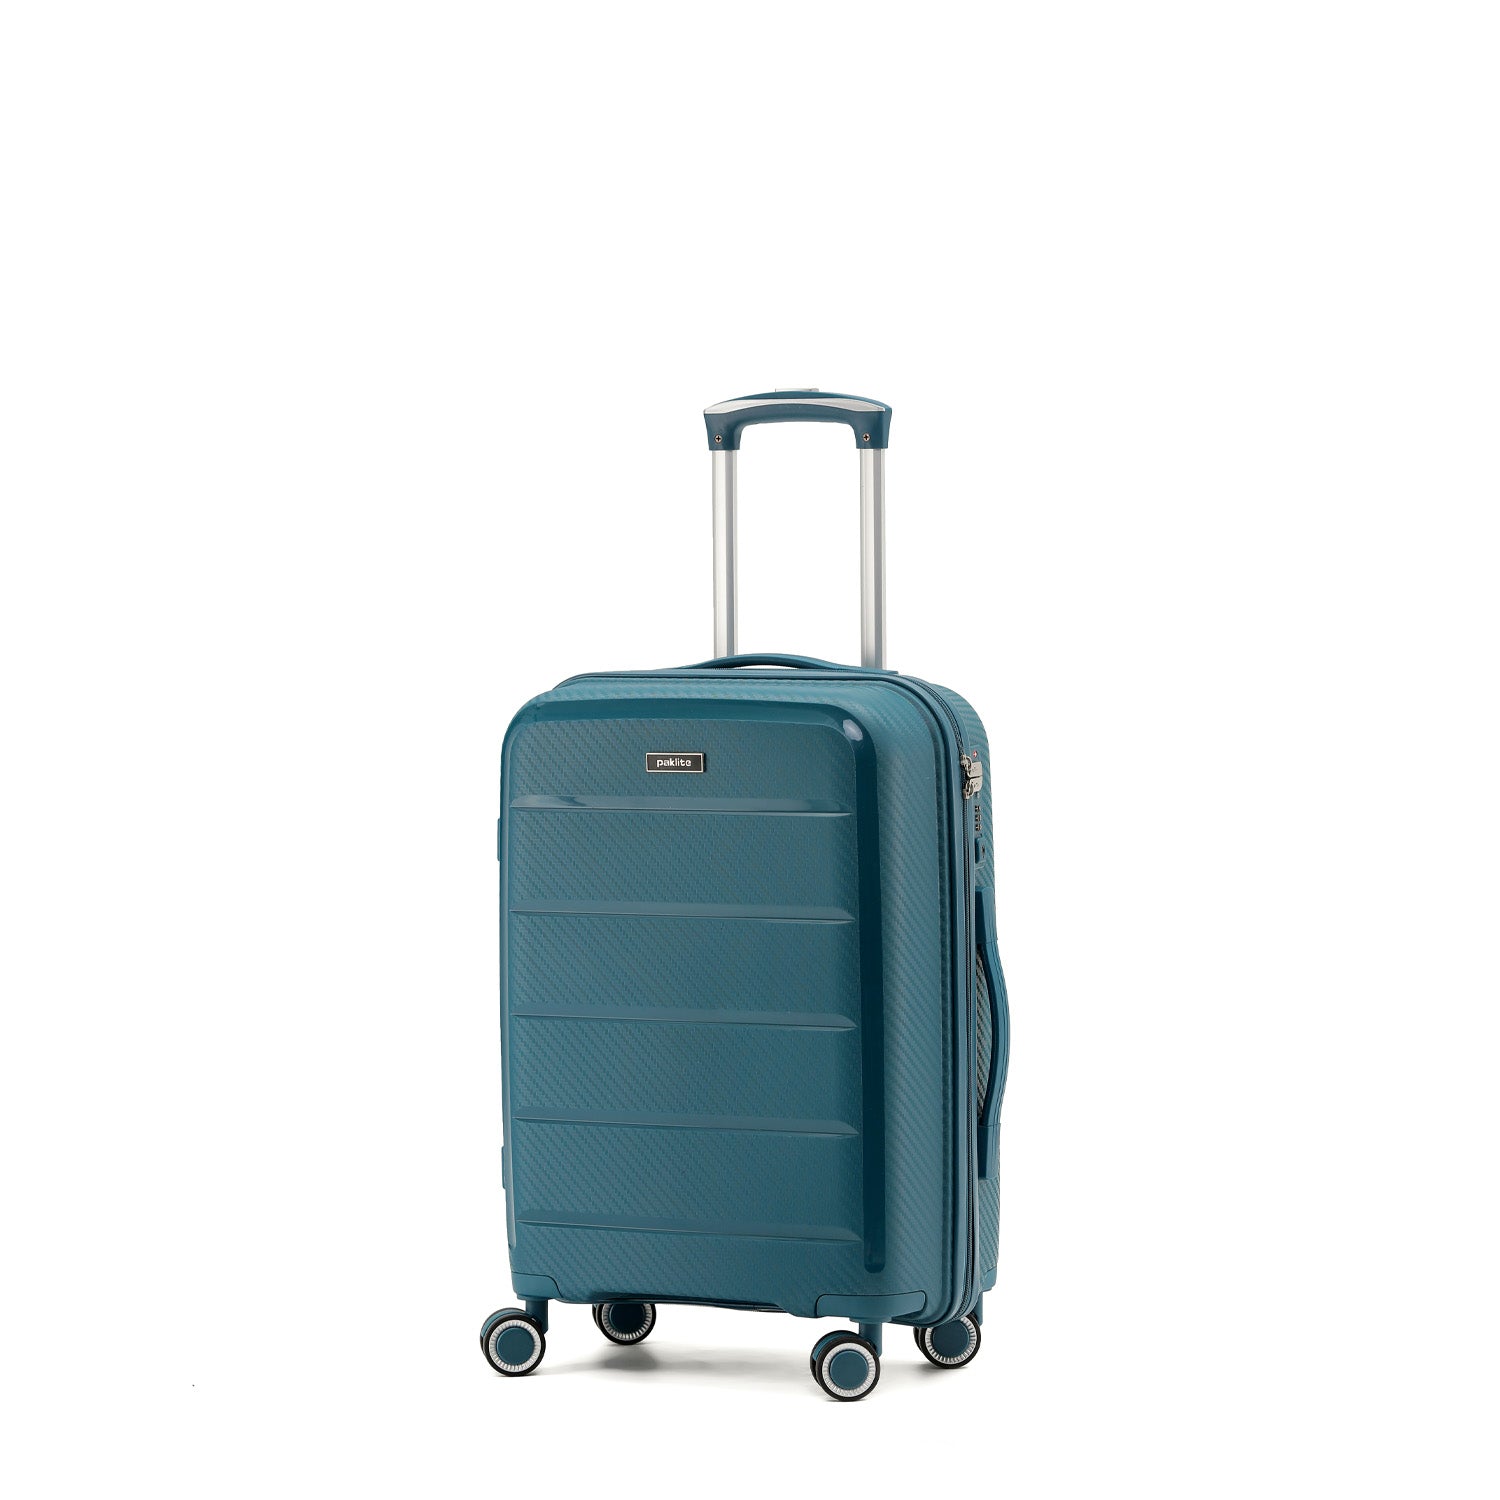 Paklite - PA7350 Set of 3 Suitcases - Blue-20